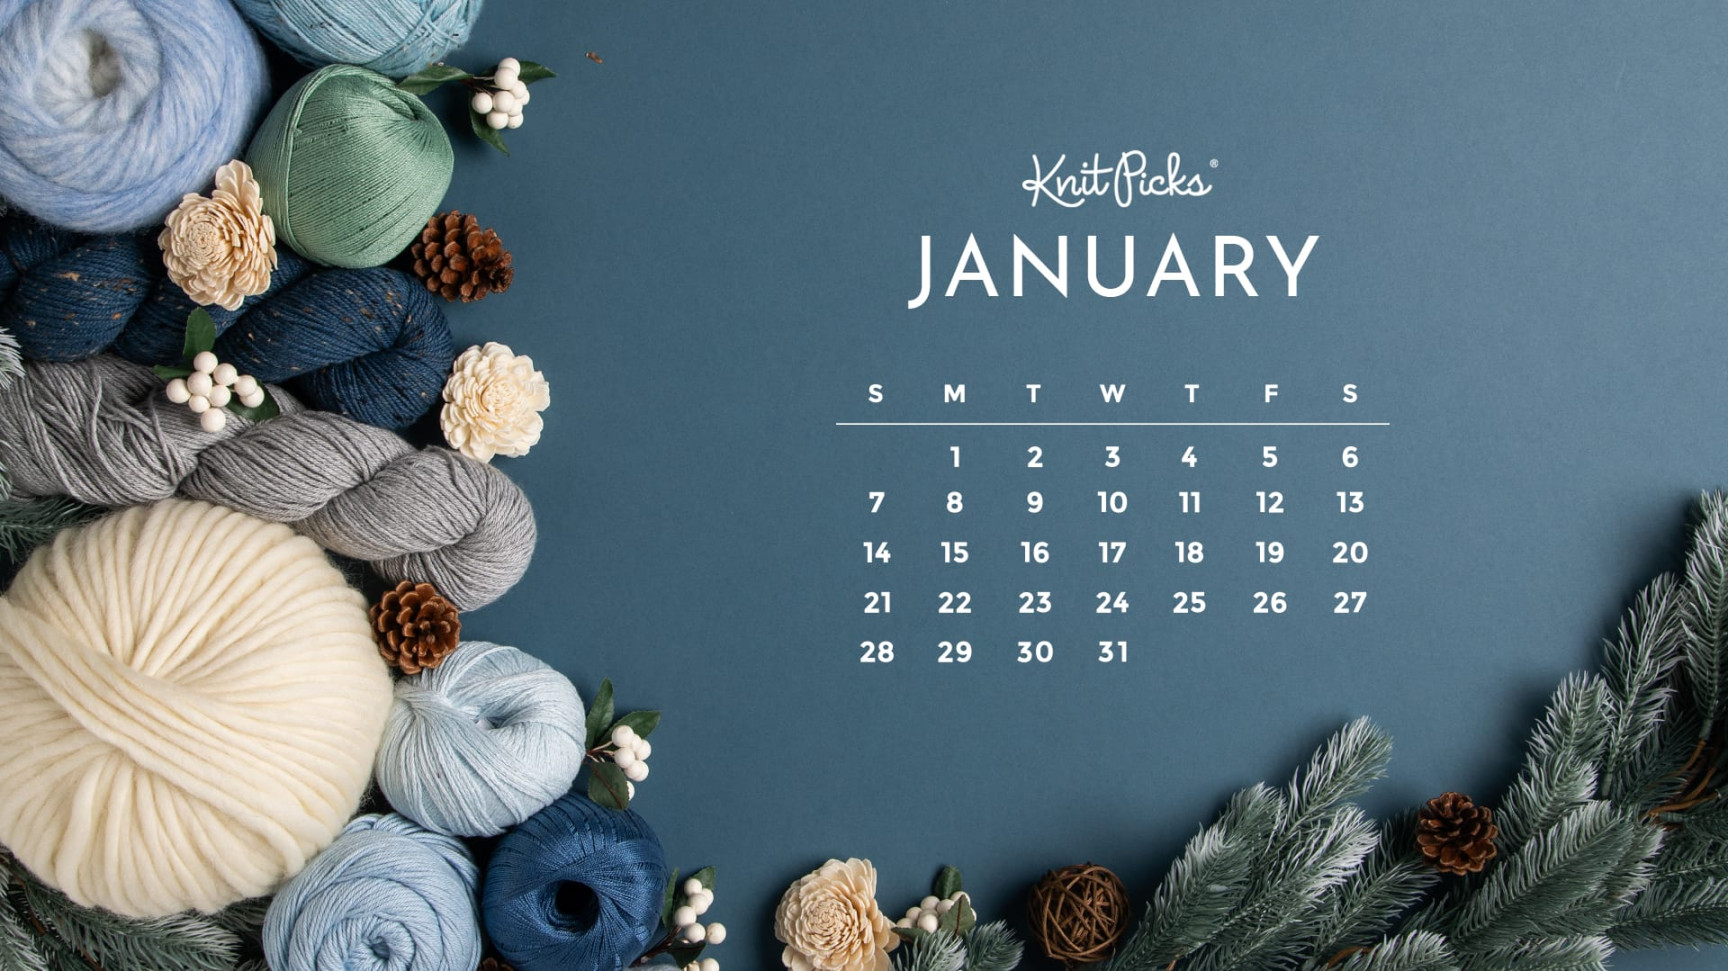 Free Downloadable January  Calendar - The Knit Picks Staff